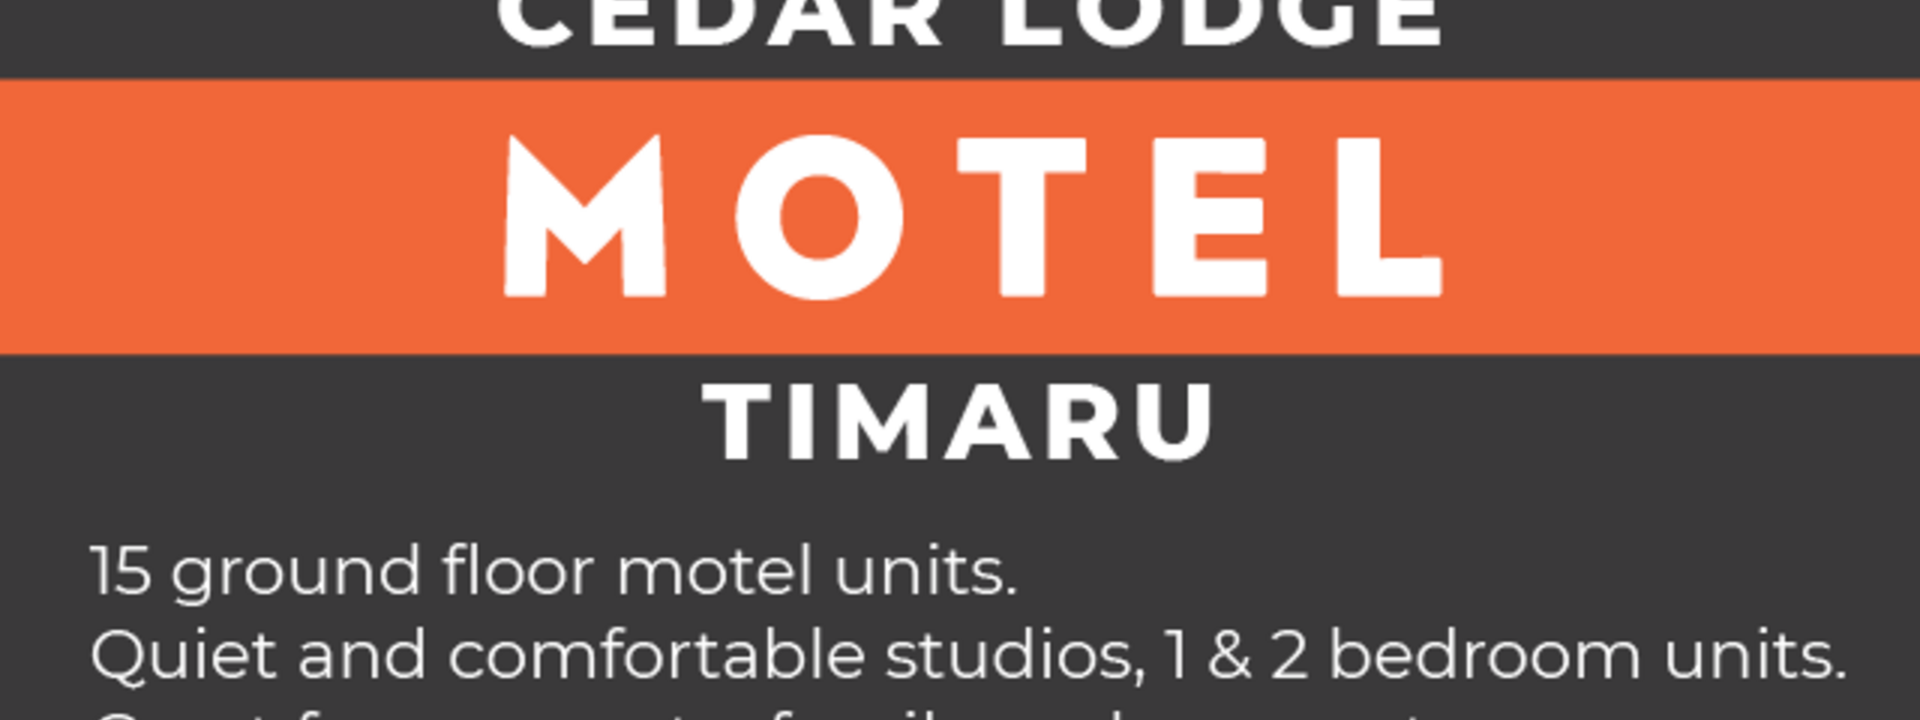 cedar_lodge_motel-logo.png